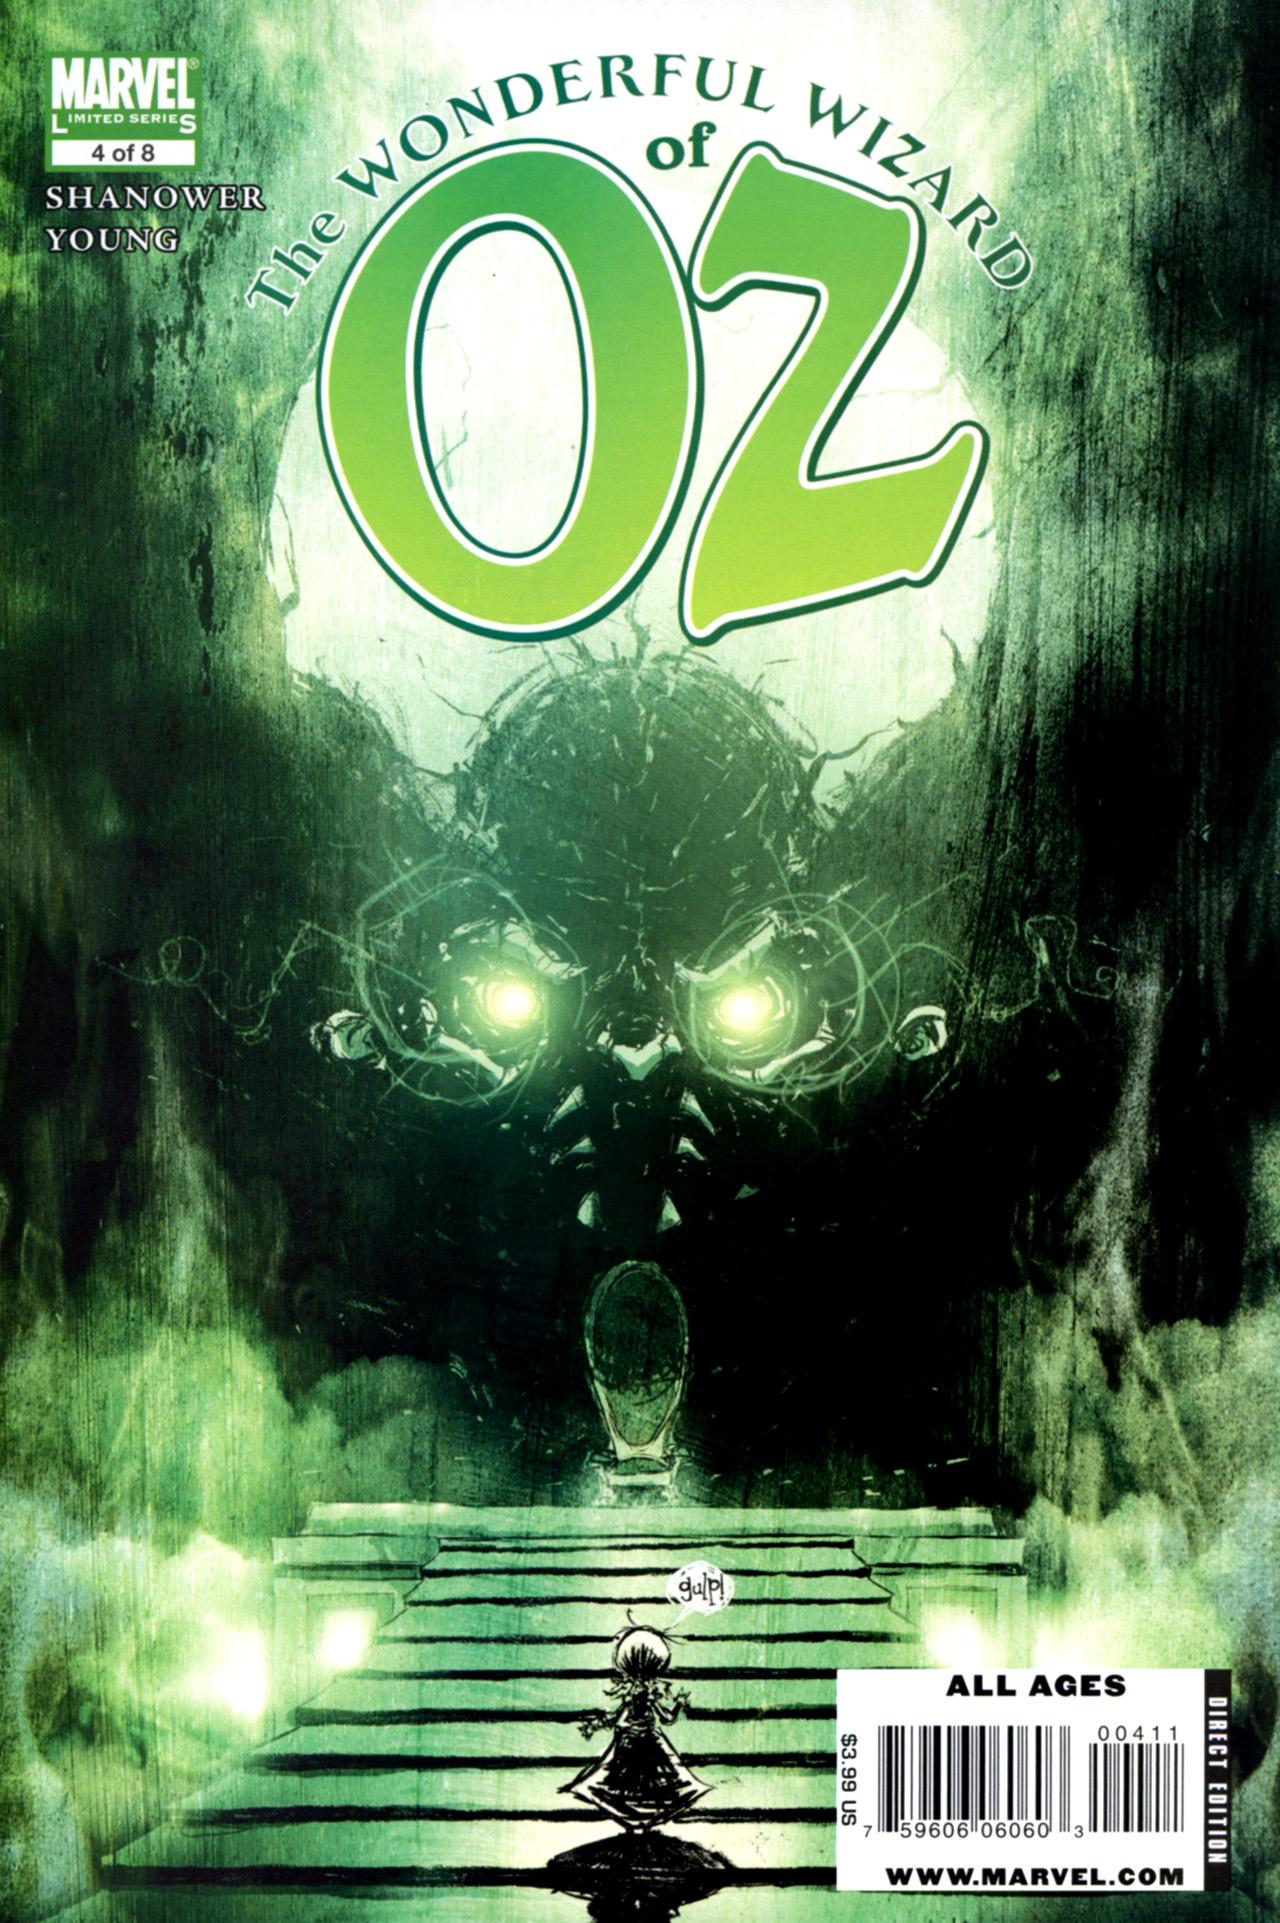 The Wonderful Wizard of Oz Vol. 1 #4